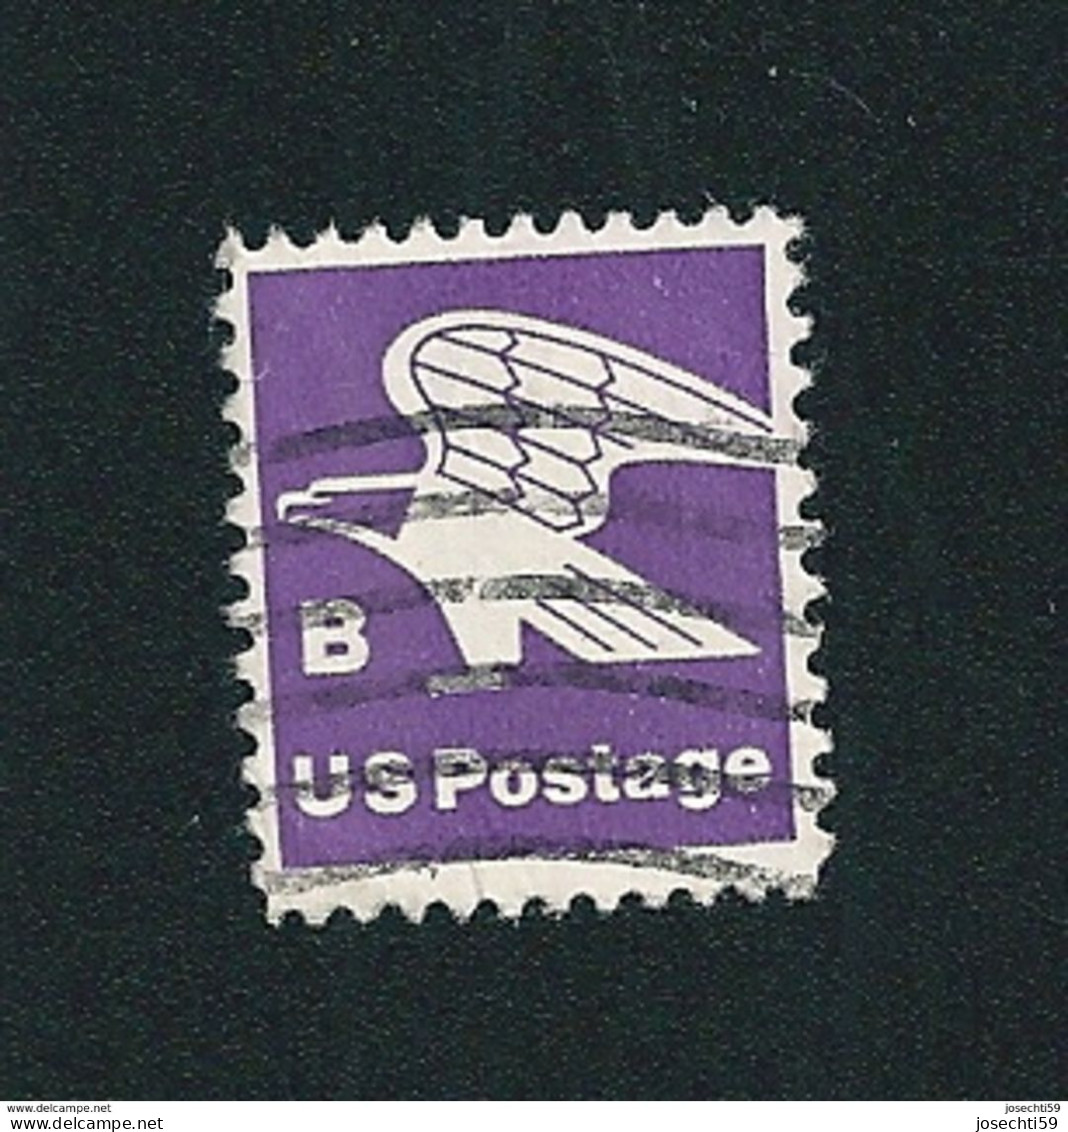 N° 1339 USA - B - US Postage Etats-Unis (1981) Timbre Stamp Oblitéré - Gebraucht